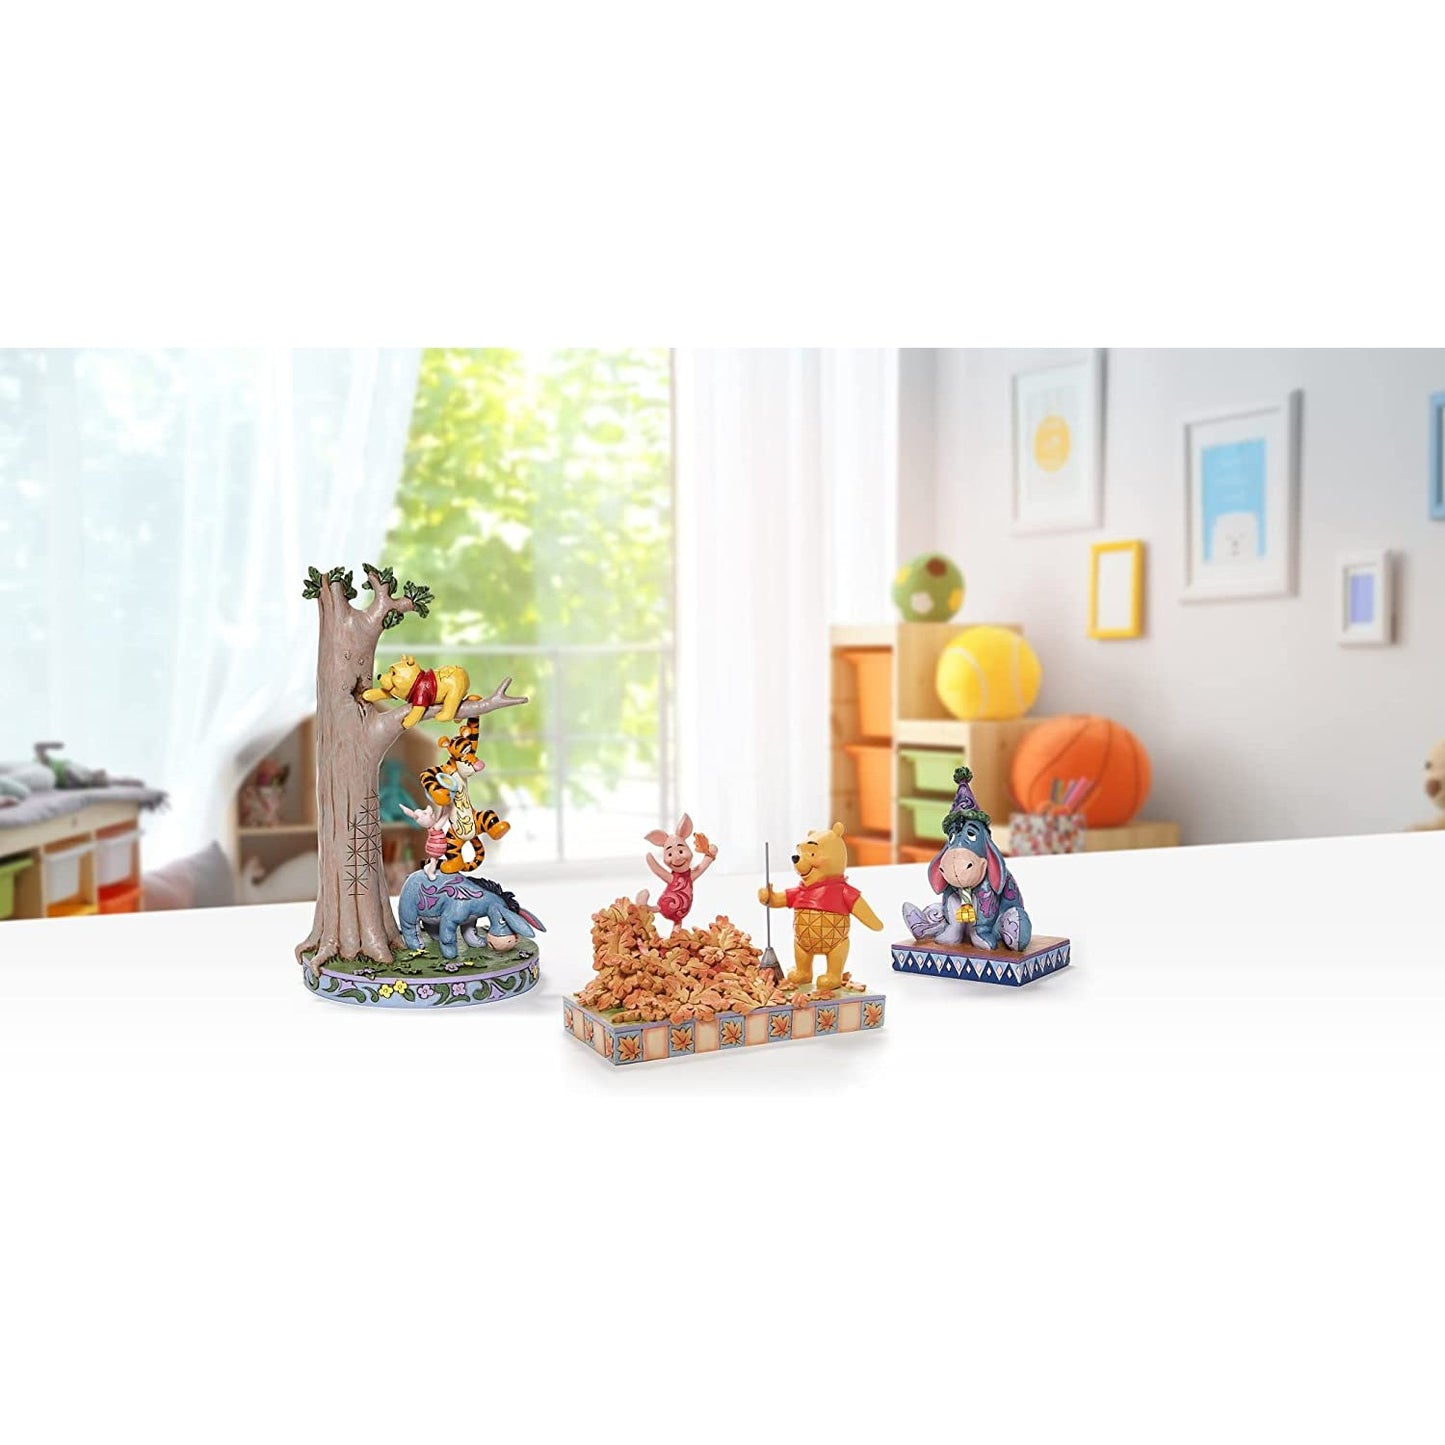 A set of Winnie the Pooh figurines.